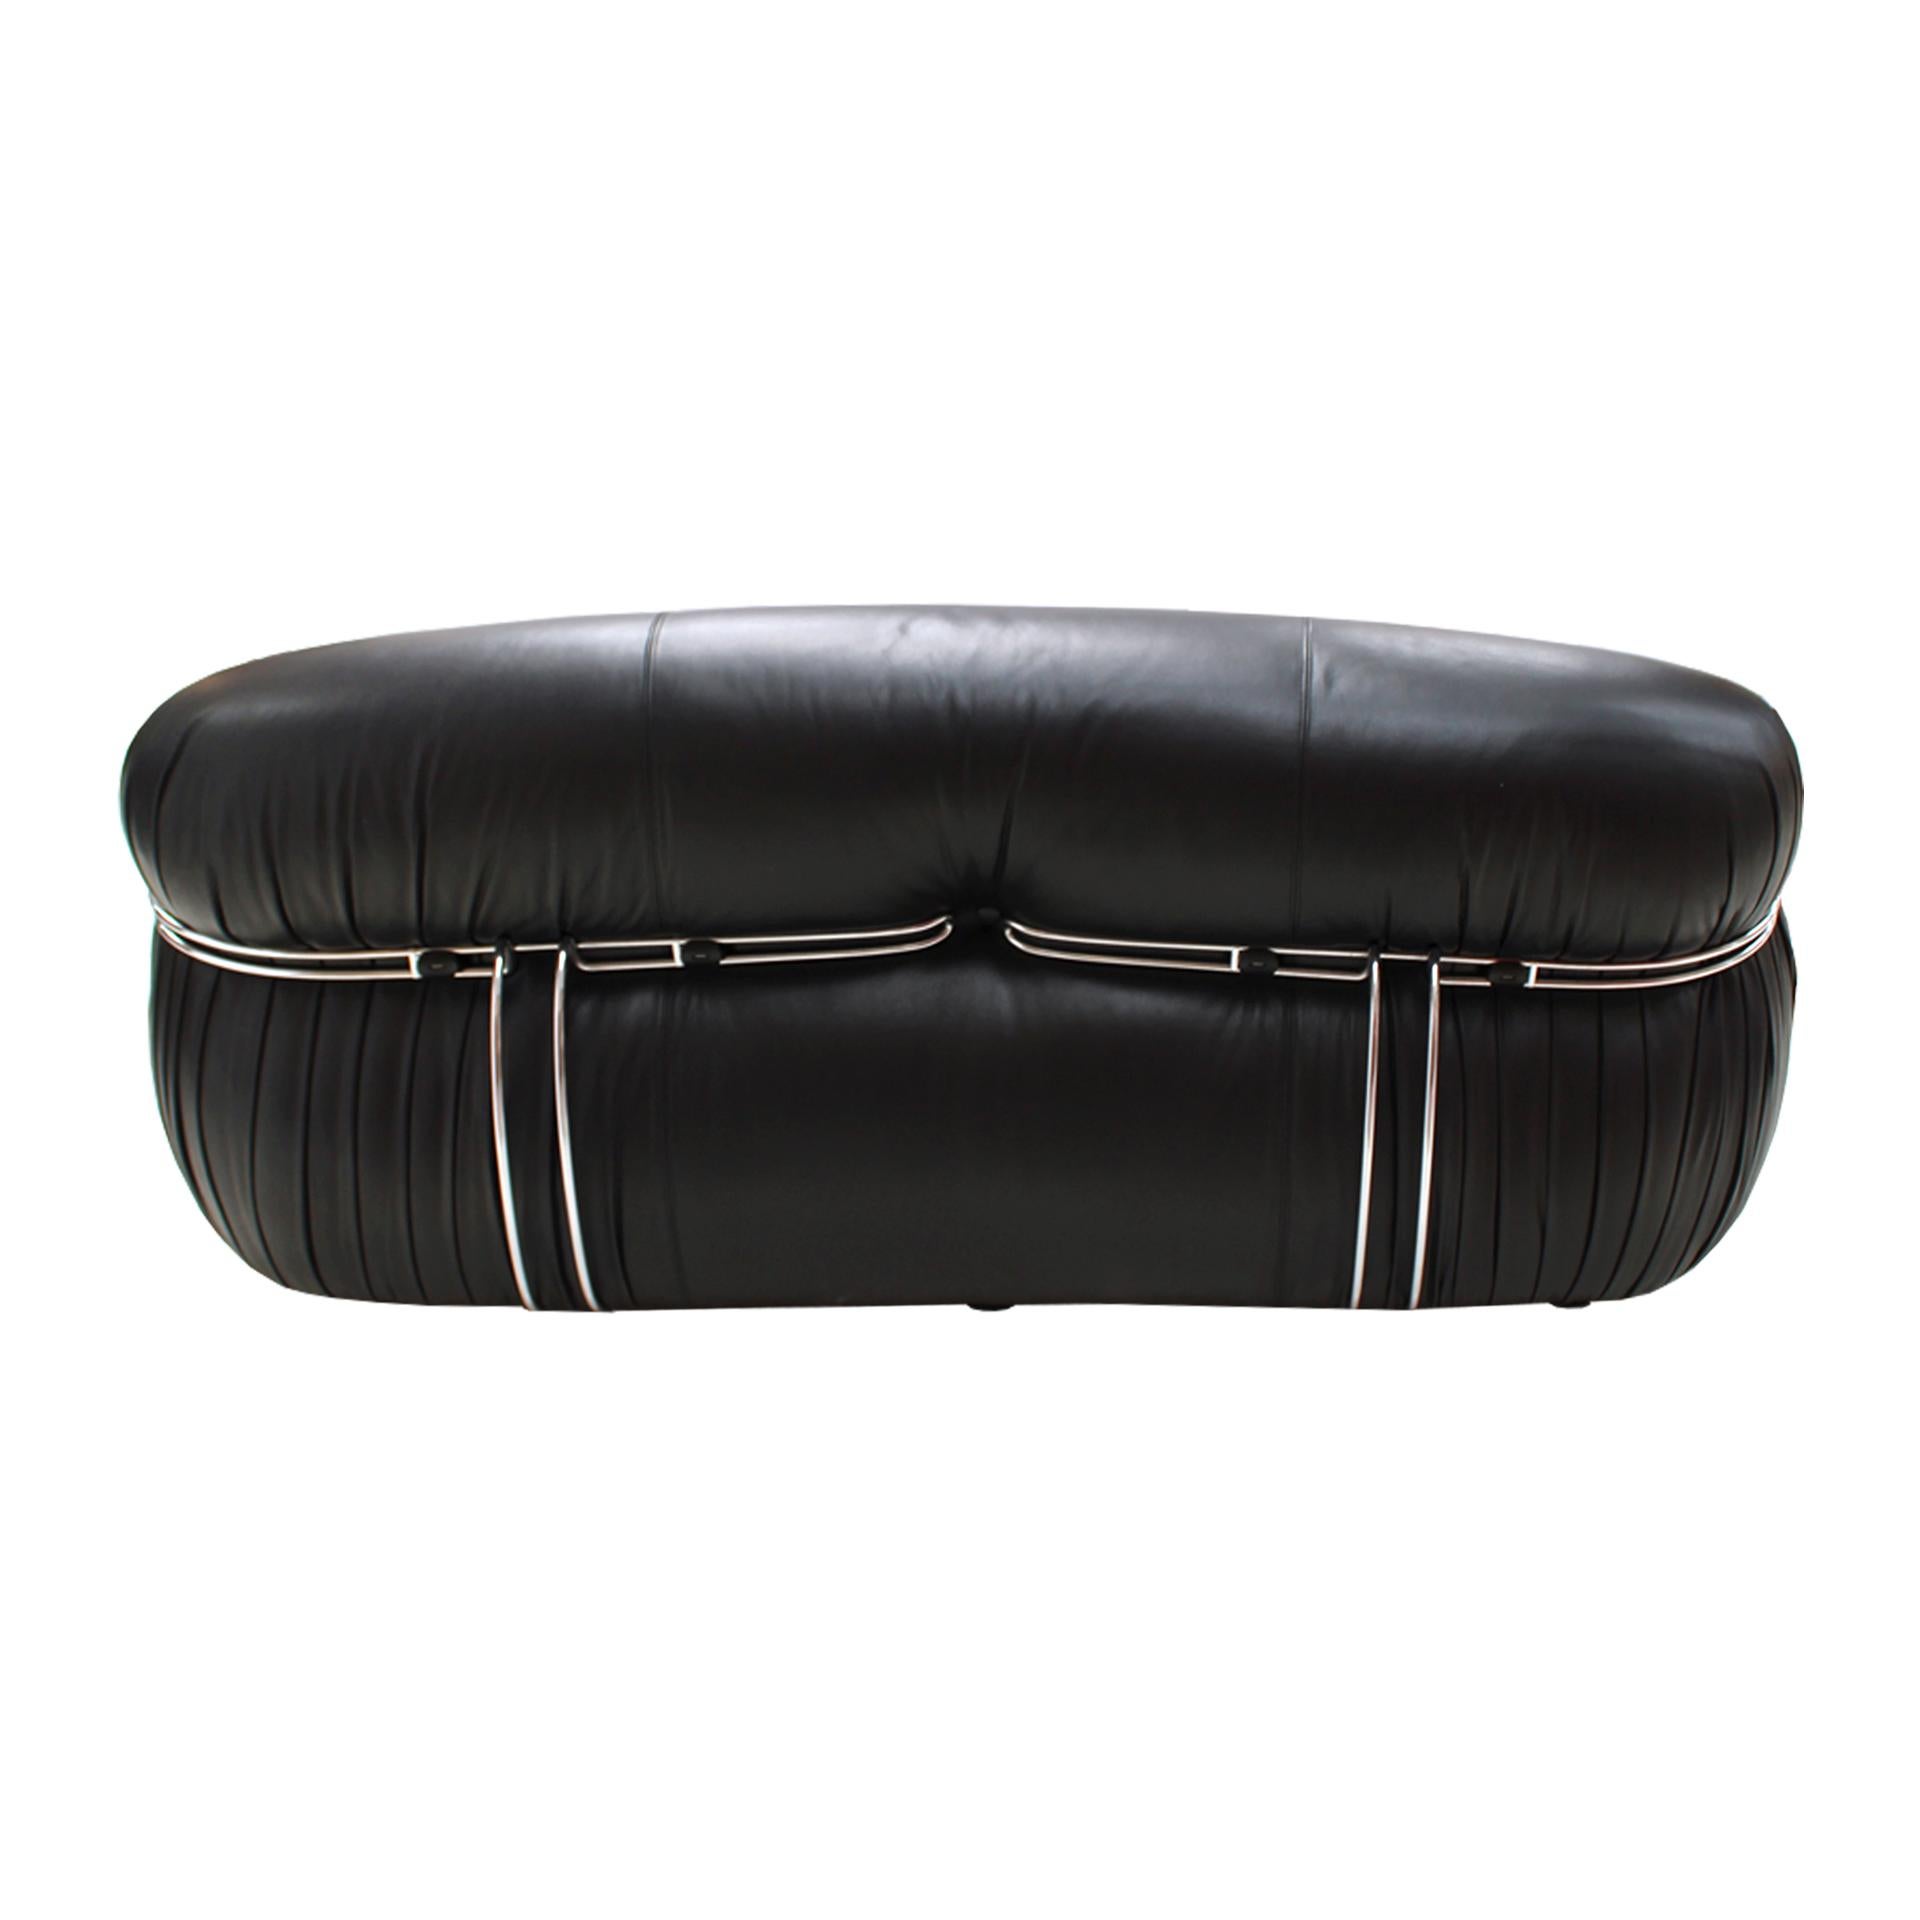 Mid-20th Century Mid-Century Modern Reupholstered Black Leather Soriana Italian Sofa Vintage For Sale